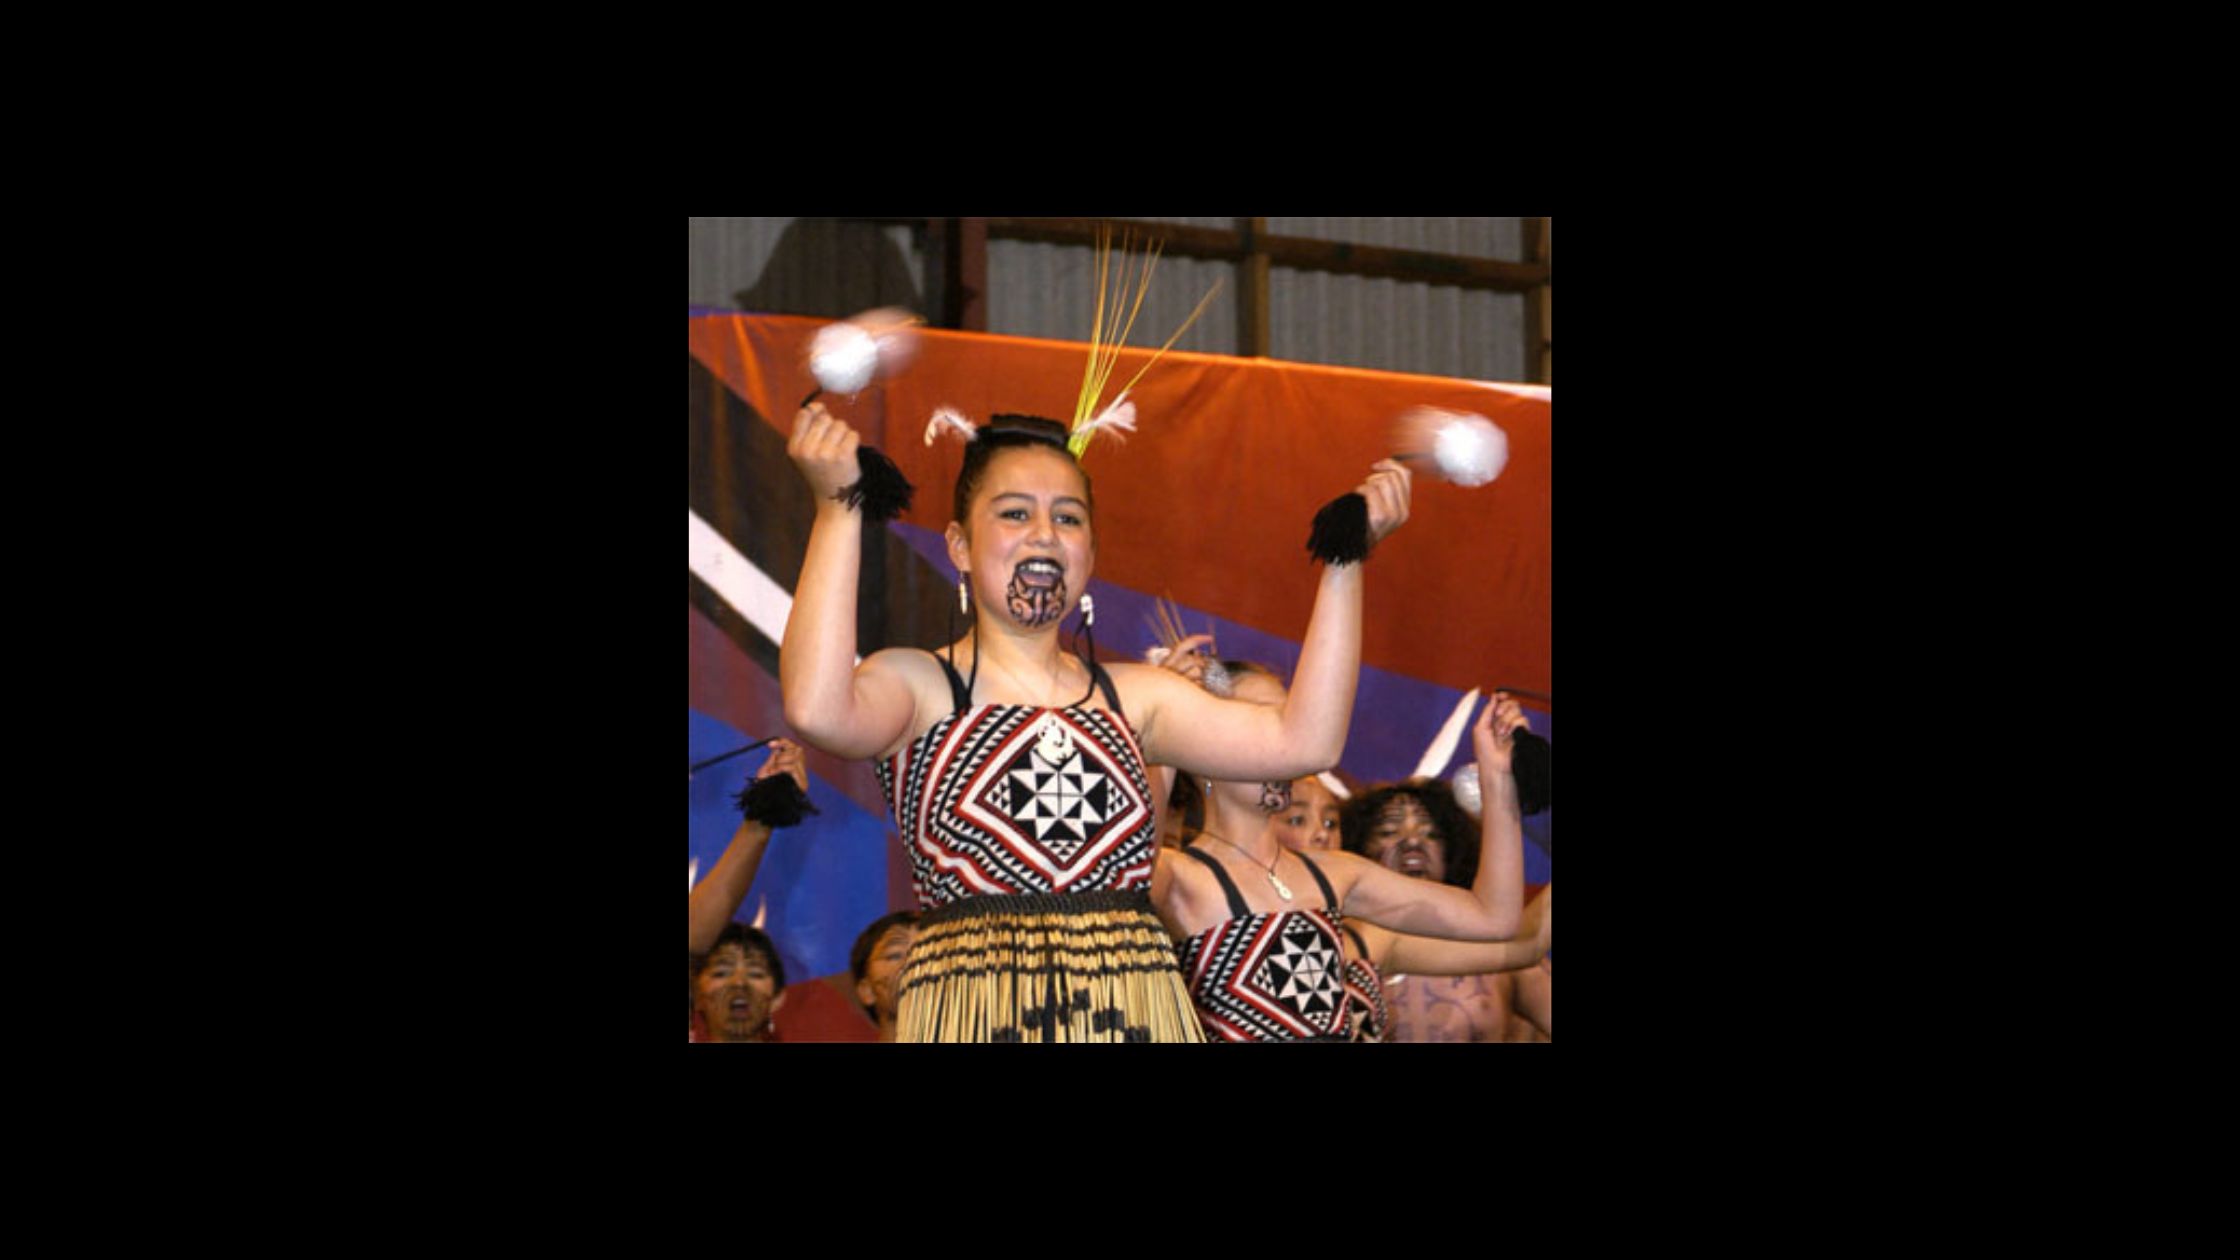 a woman holding poi sticks with Maori facial tattoos and traditional Maori dress